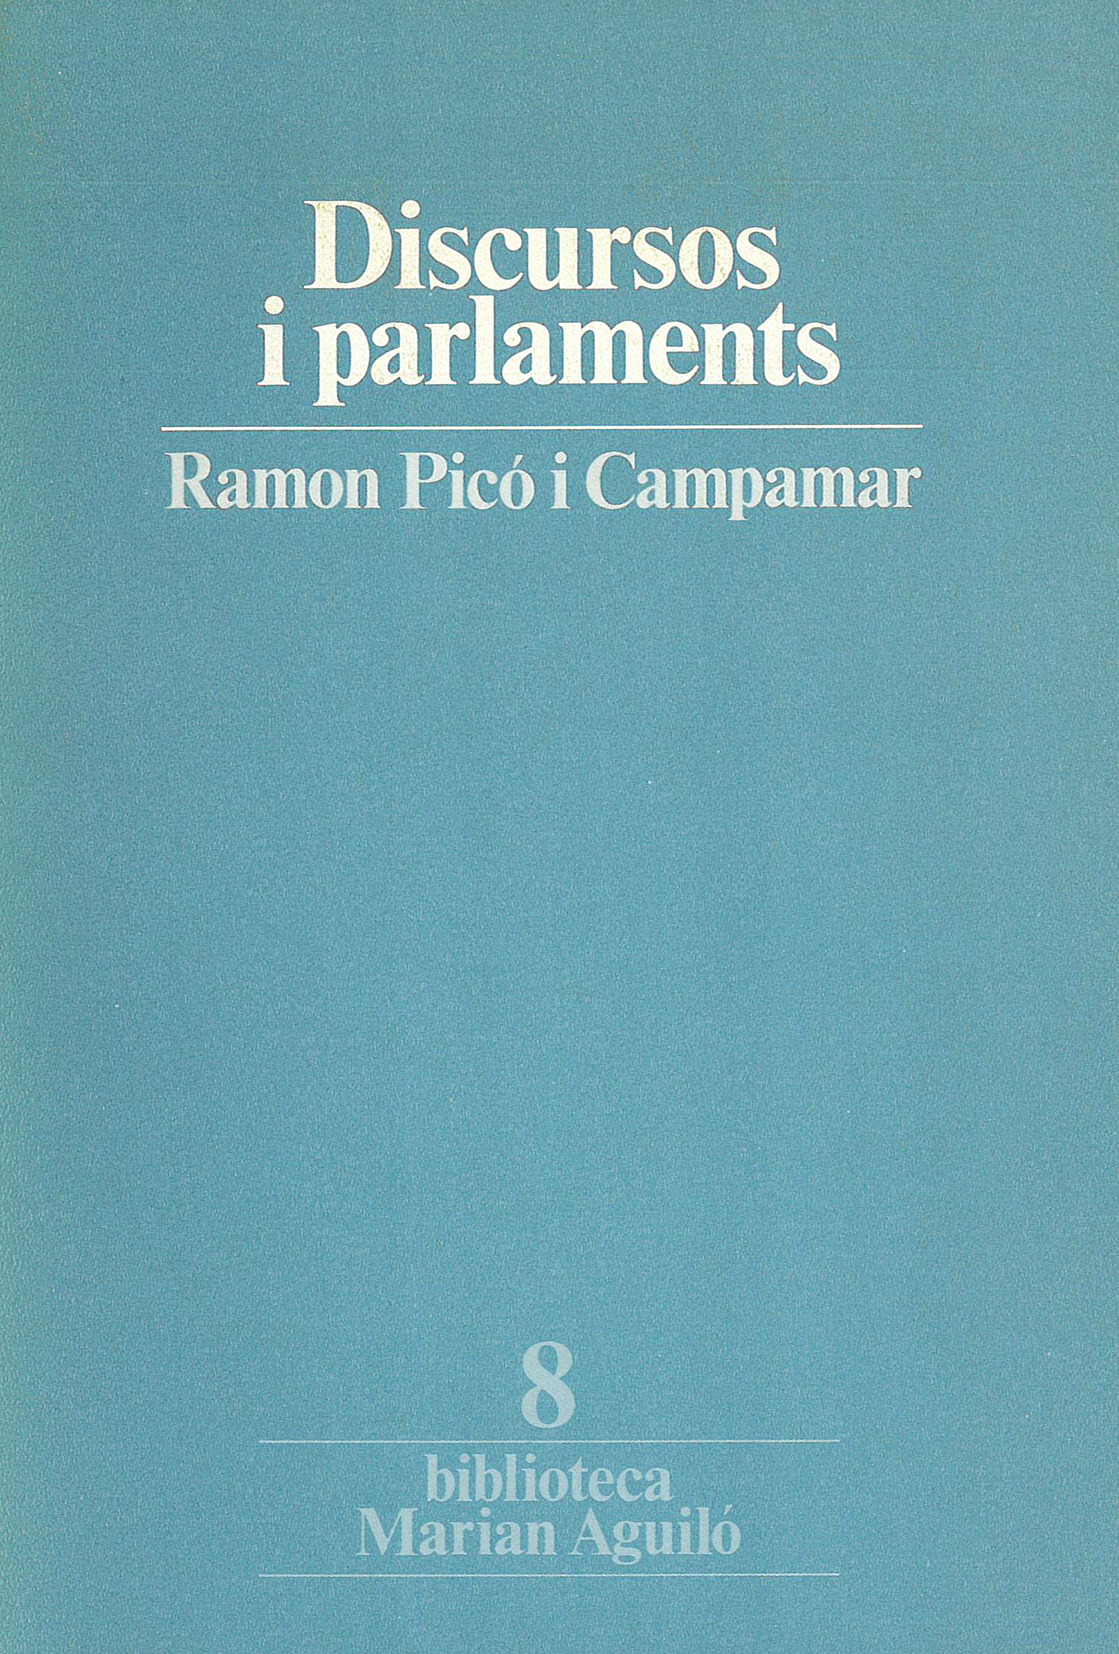 Ramon Picó i Campamar